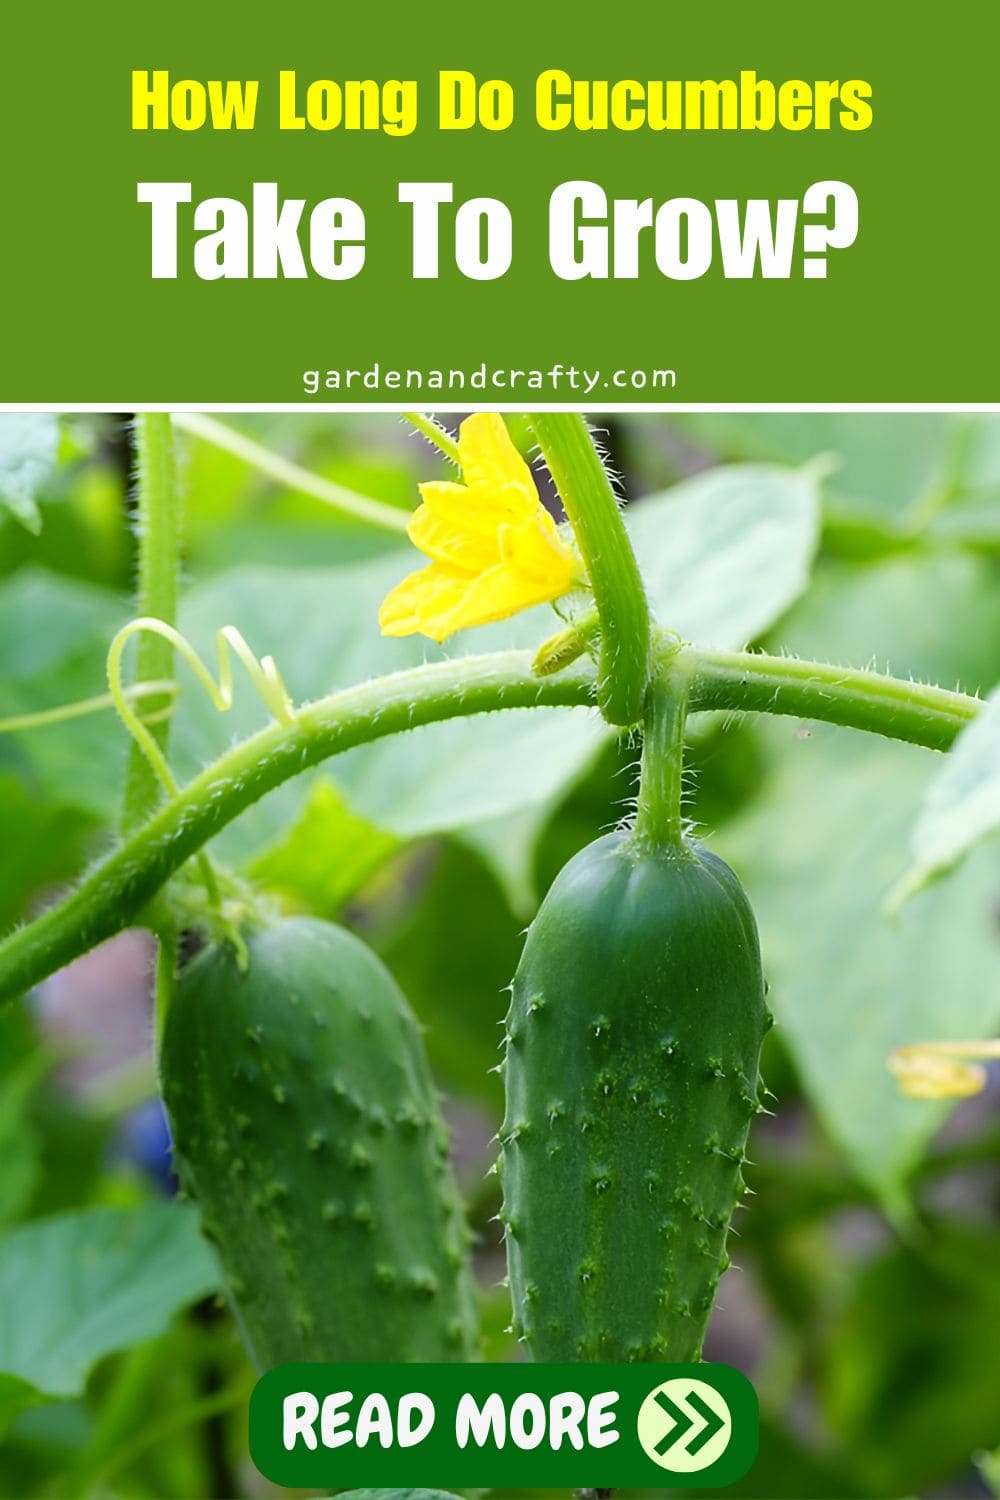 How Long Do Cucumbers Take To Grow?